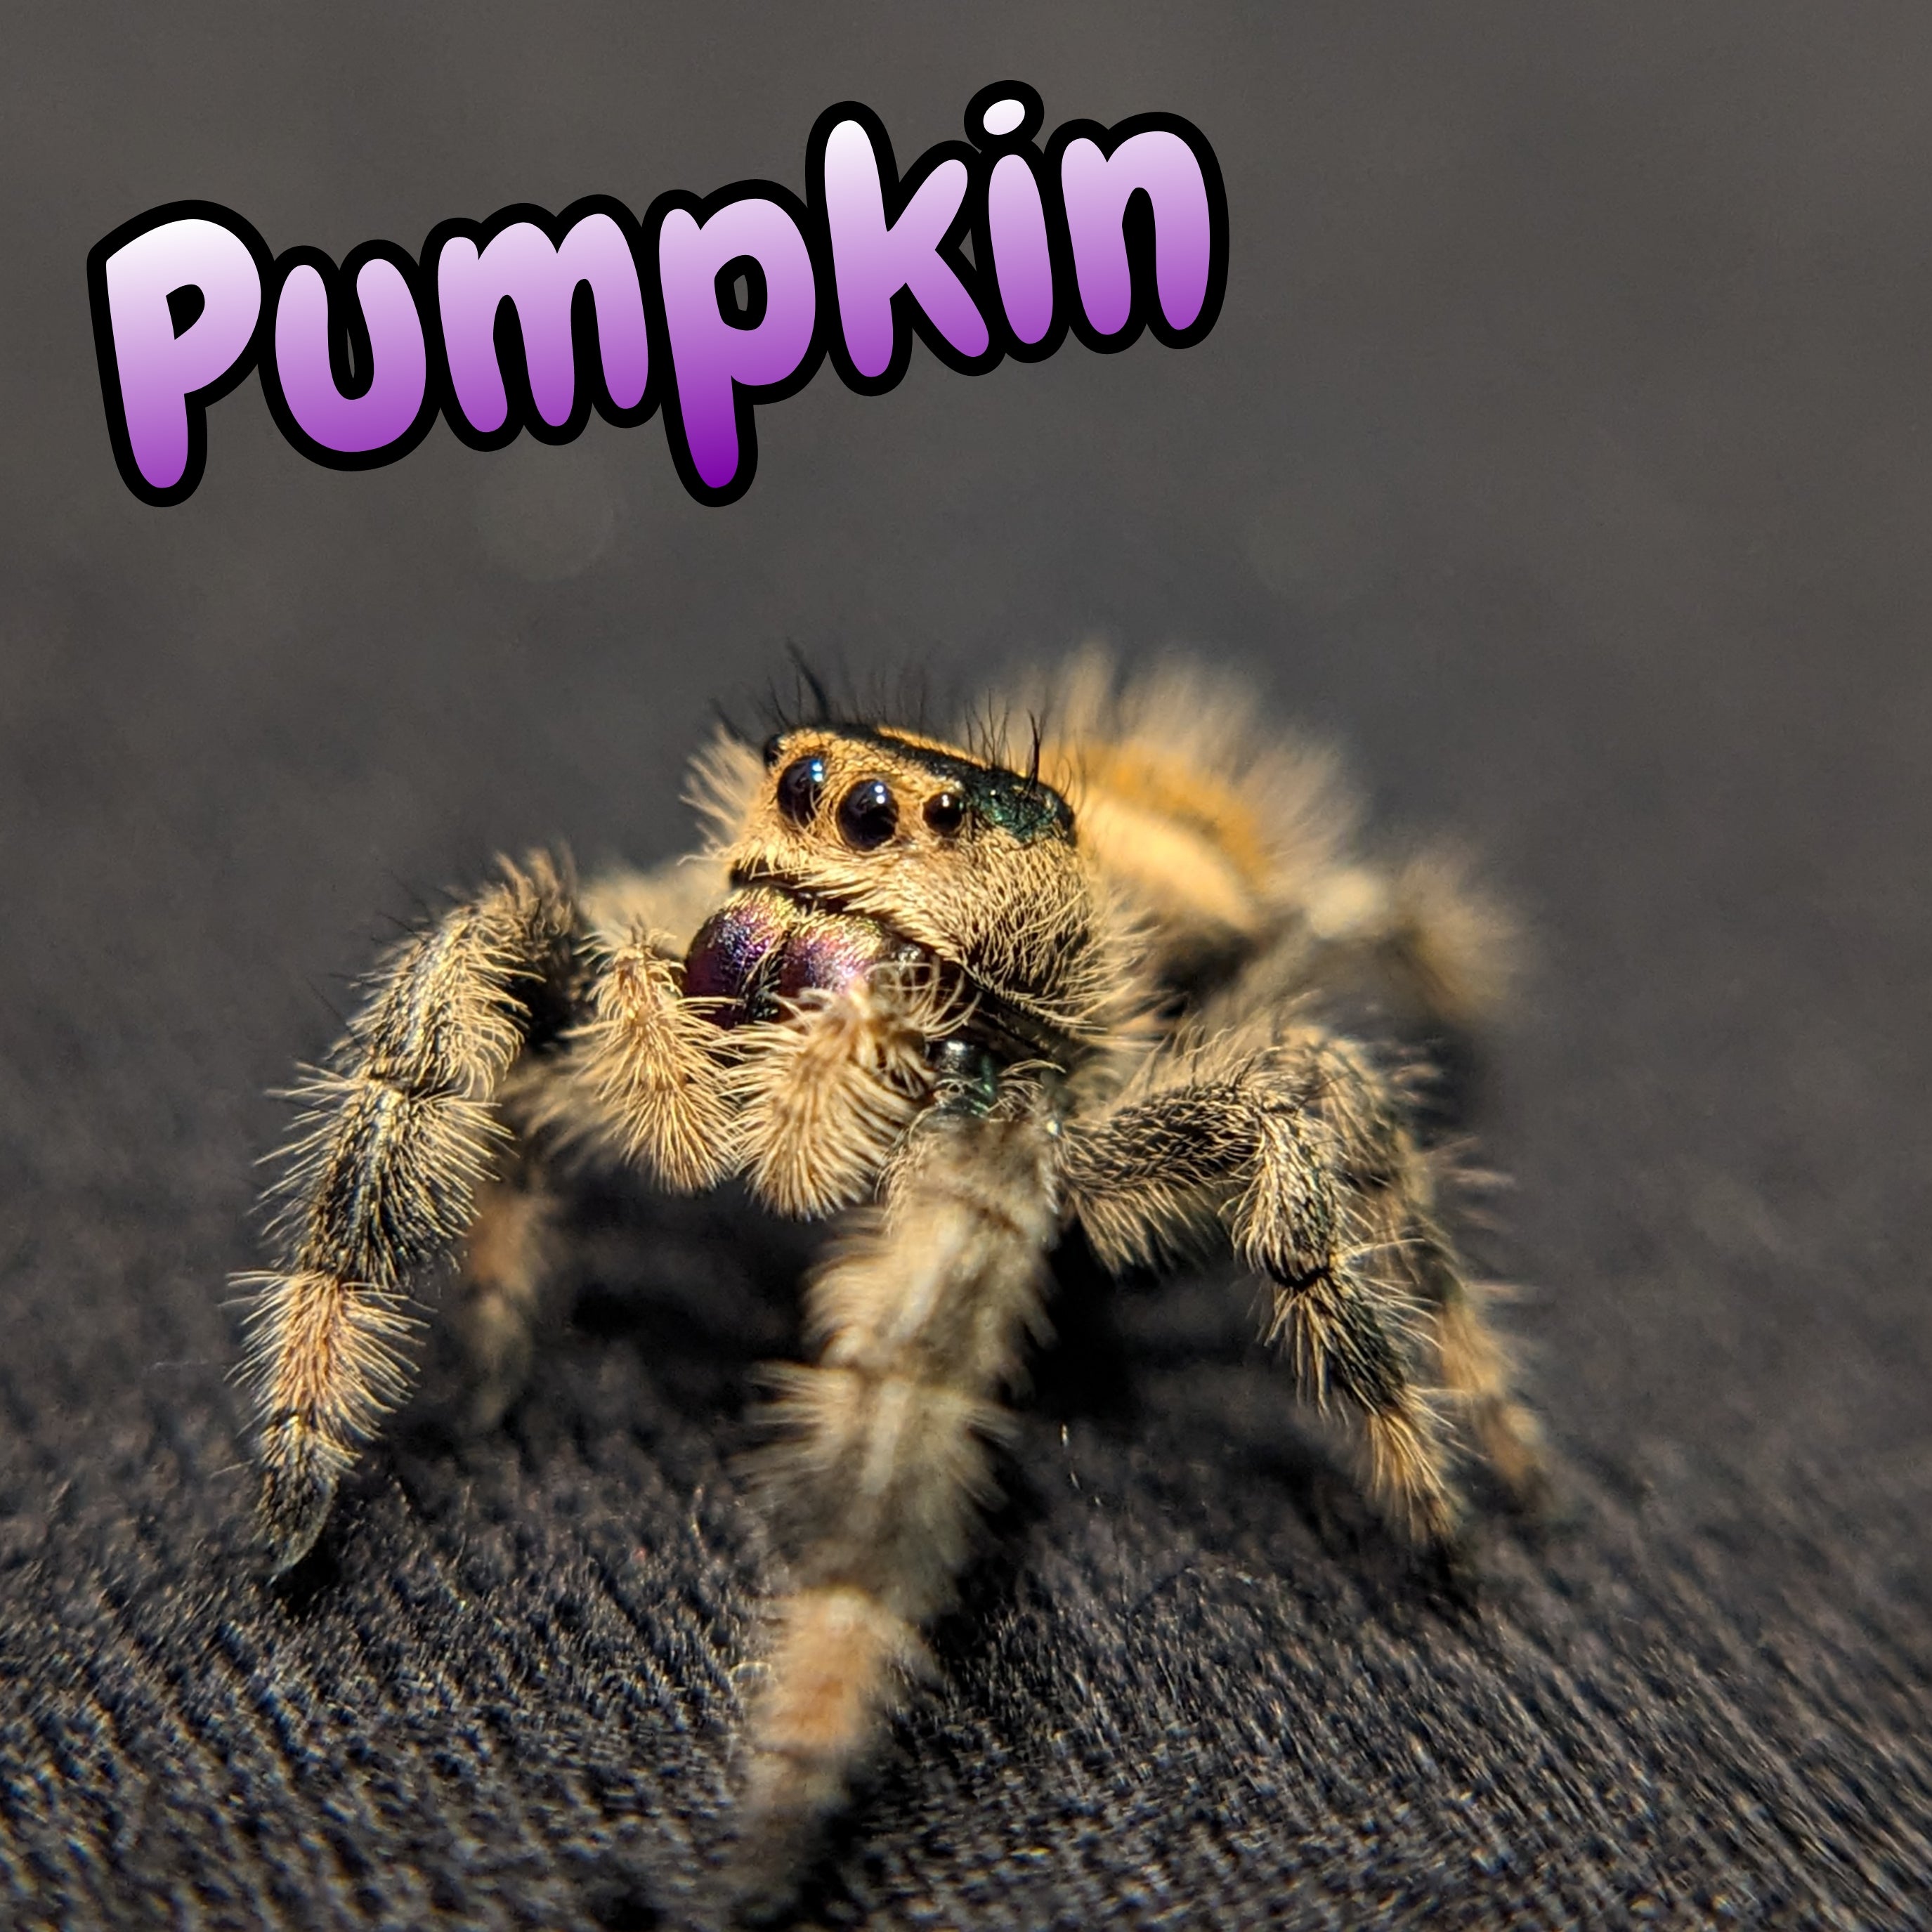 Apalachicola Regal Jumping Spider "Pumpkin"